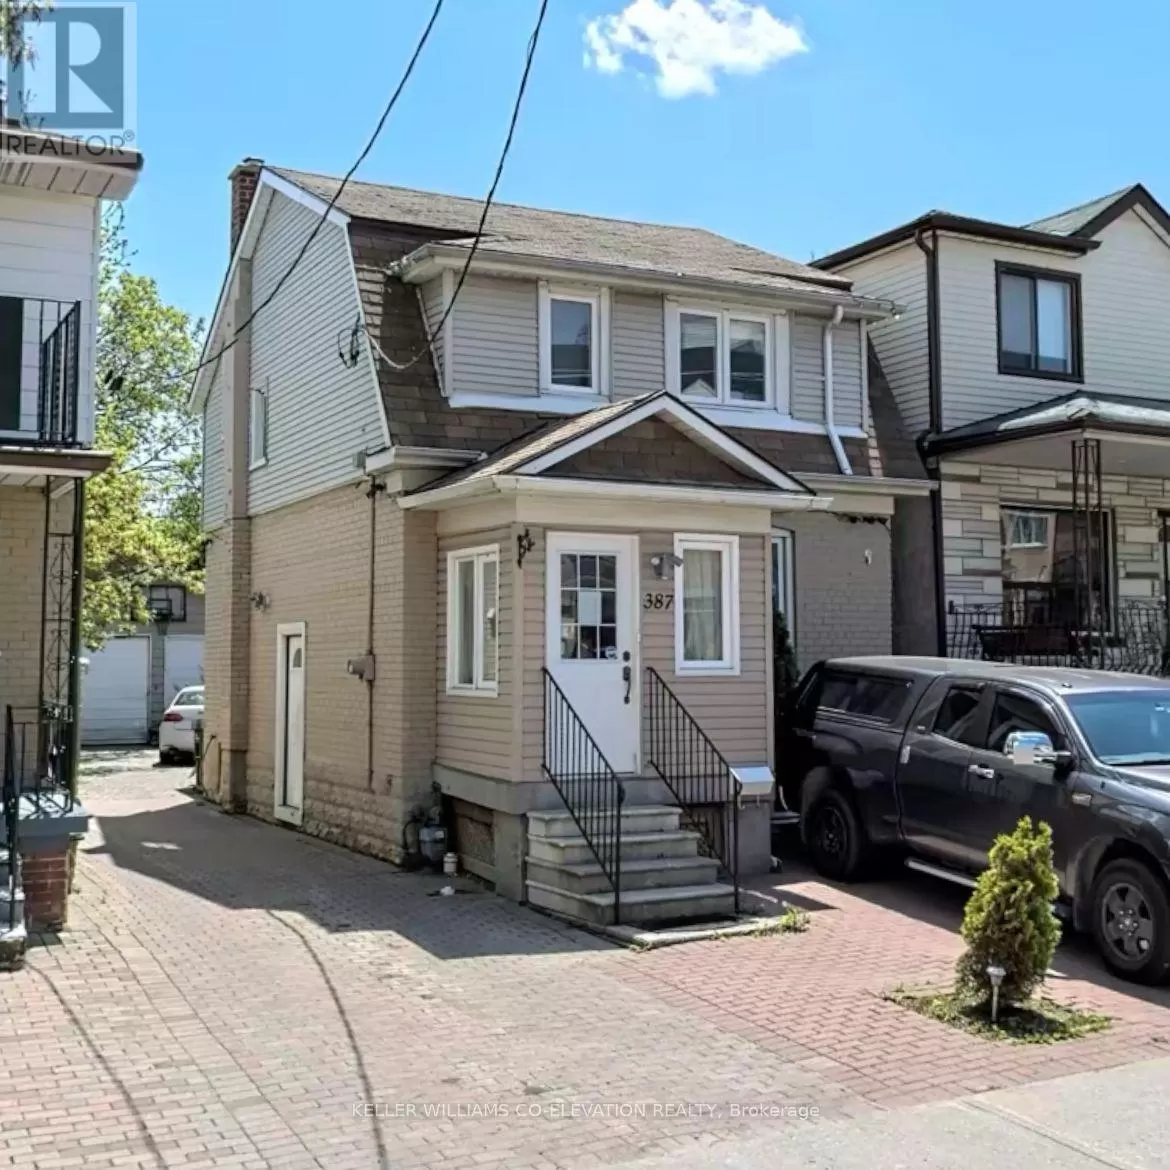 House for rent: 387 Hopewell Avenue, Toronto, Ontario M6E 2S1